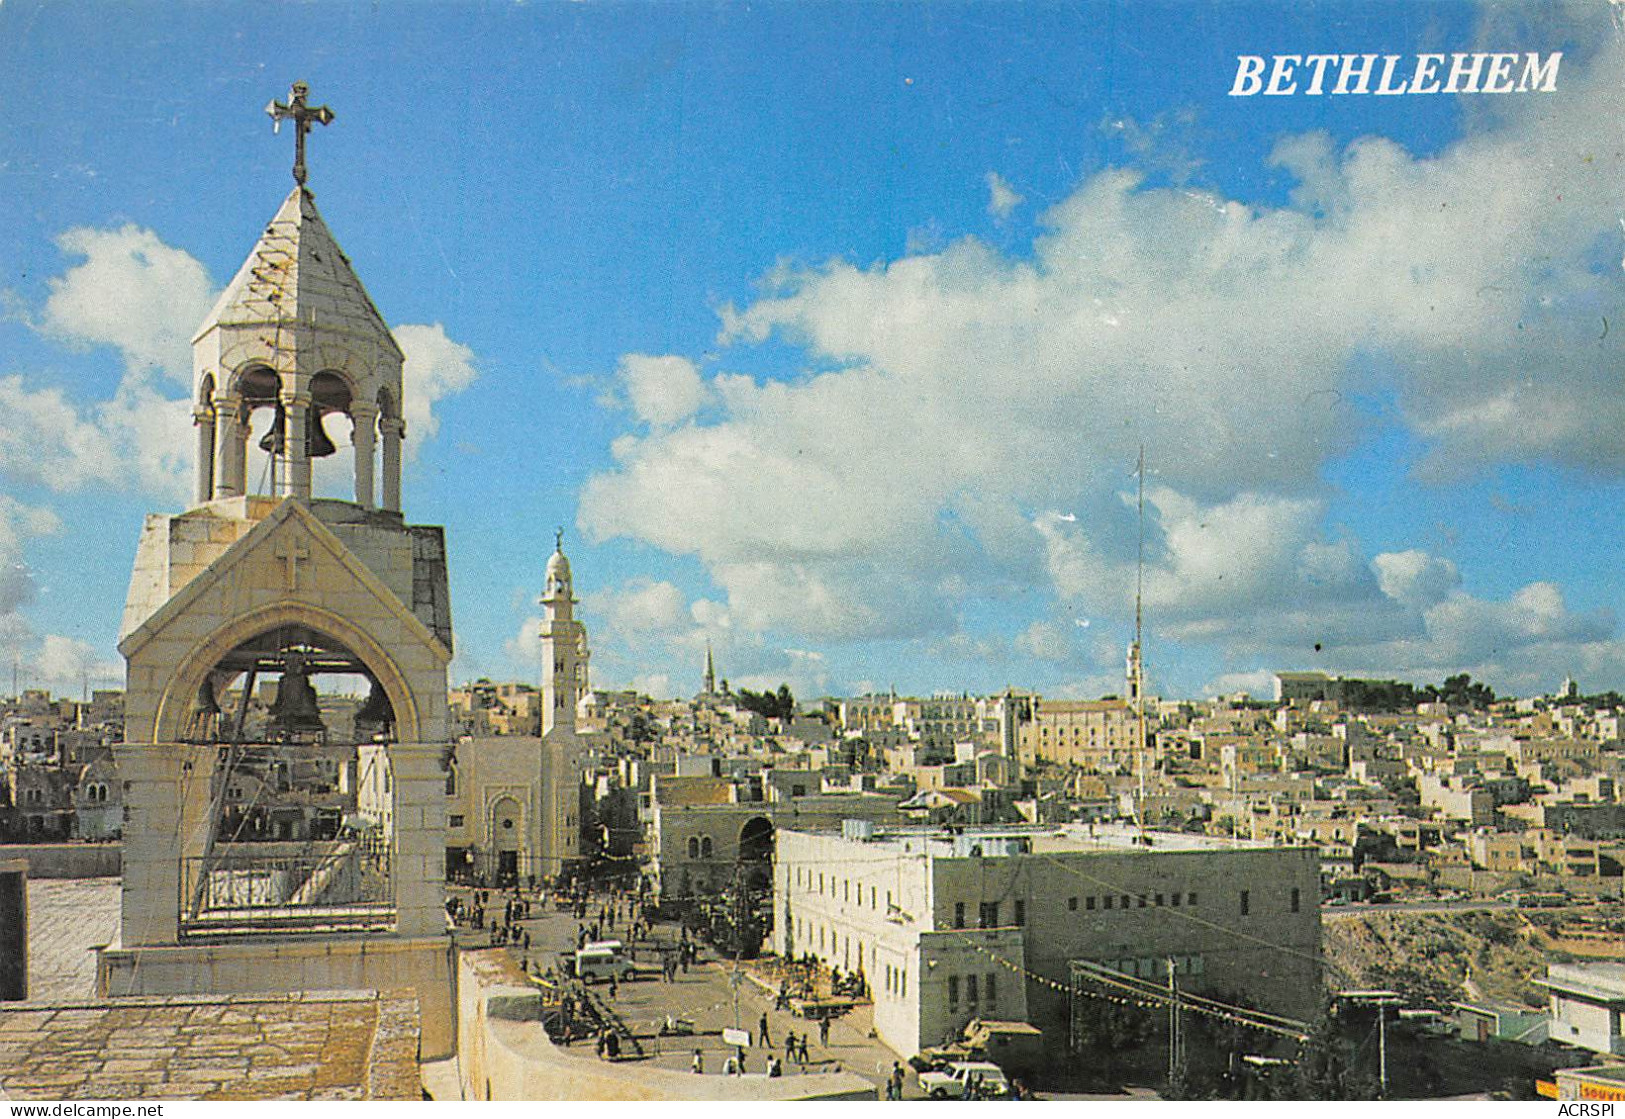  Israël ISRAEL  Bethlehem Bethleem Général View Of Bmethtetem   N°33 \ MK3030  ישר�?ל. בית לח�? - Israel